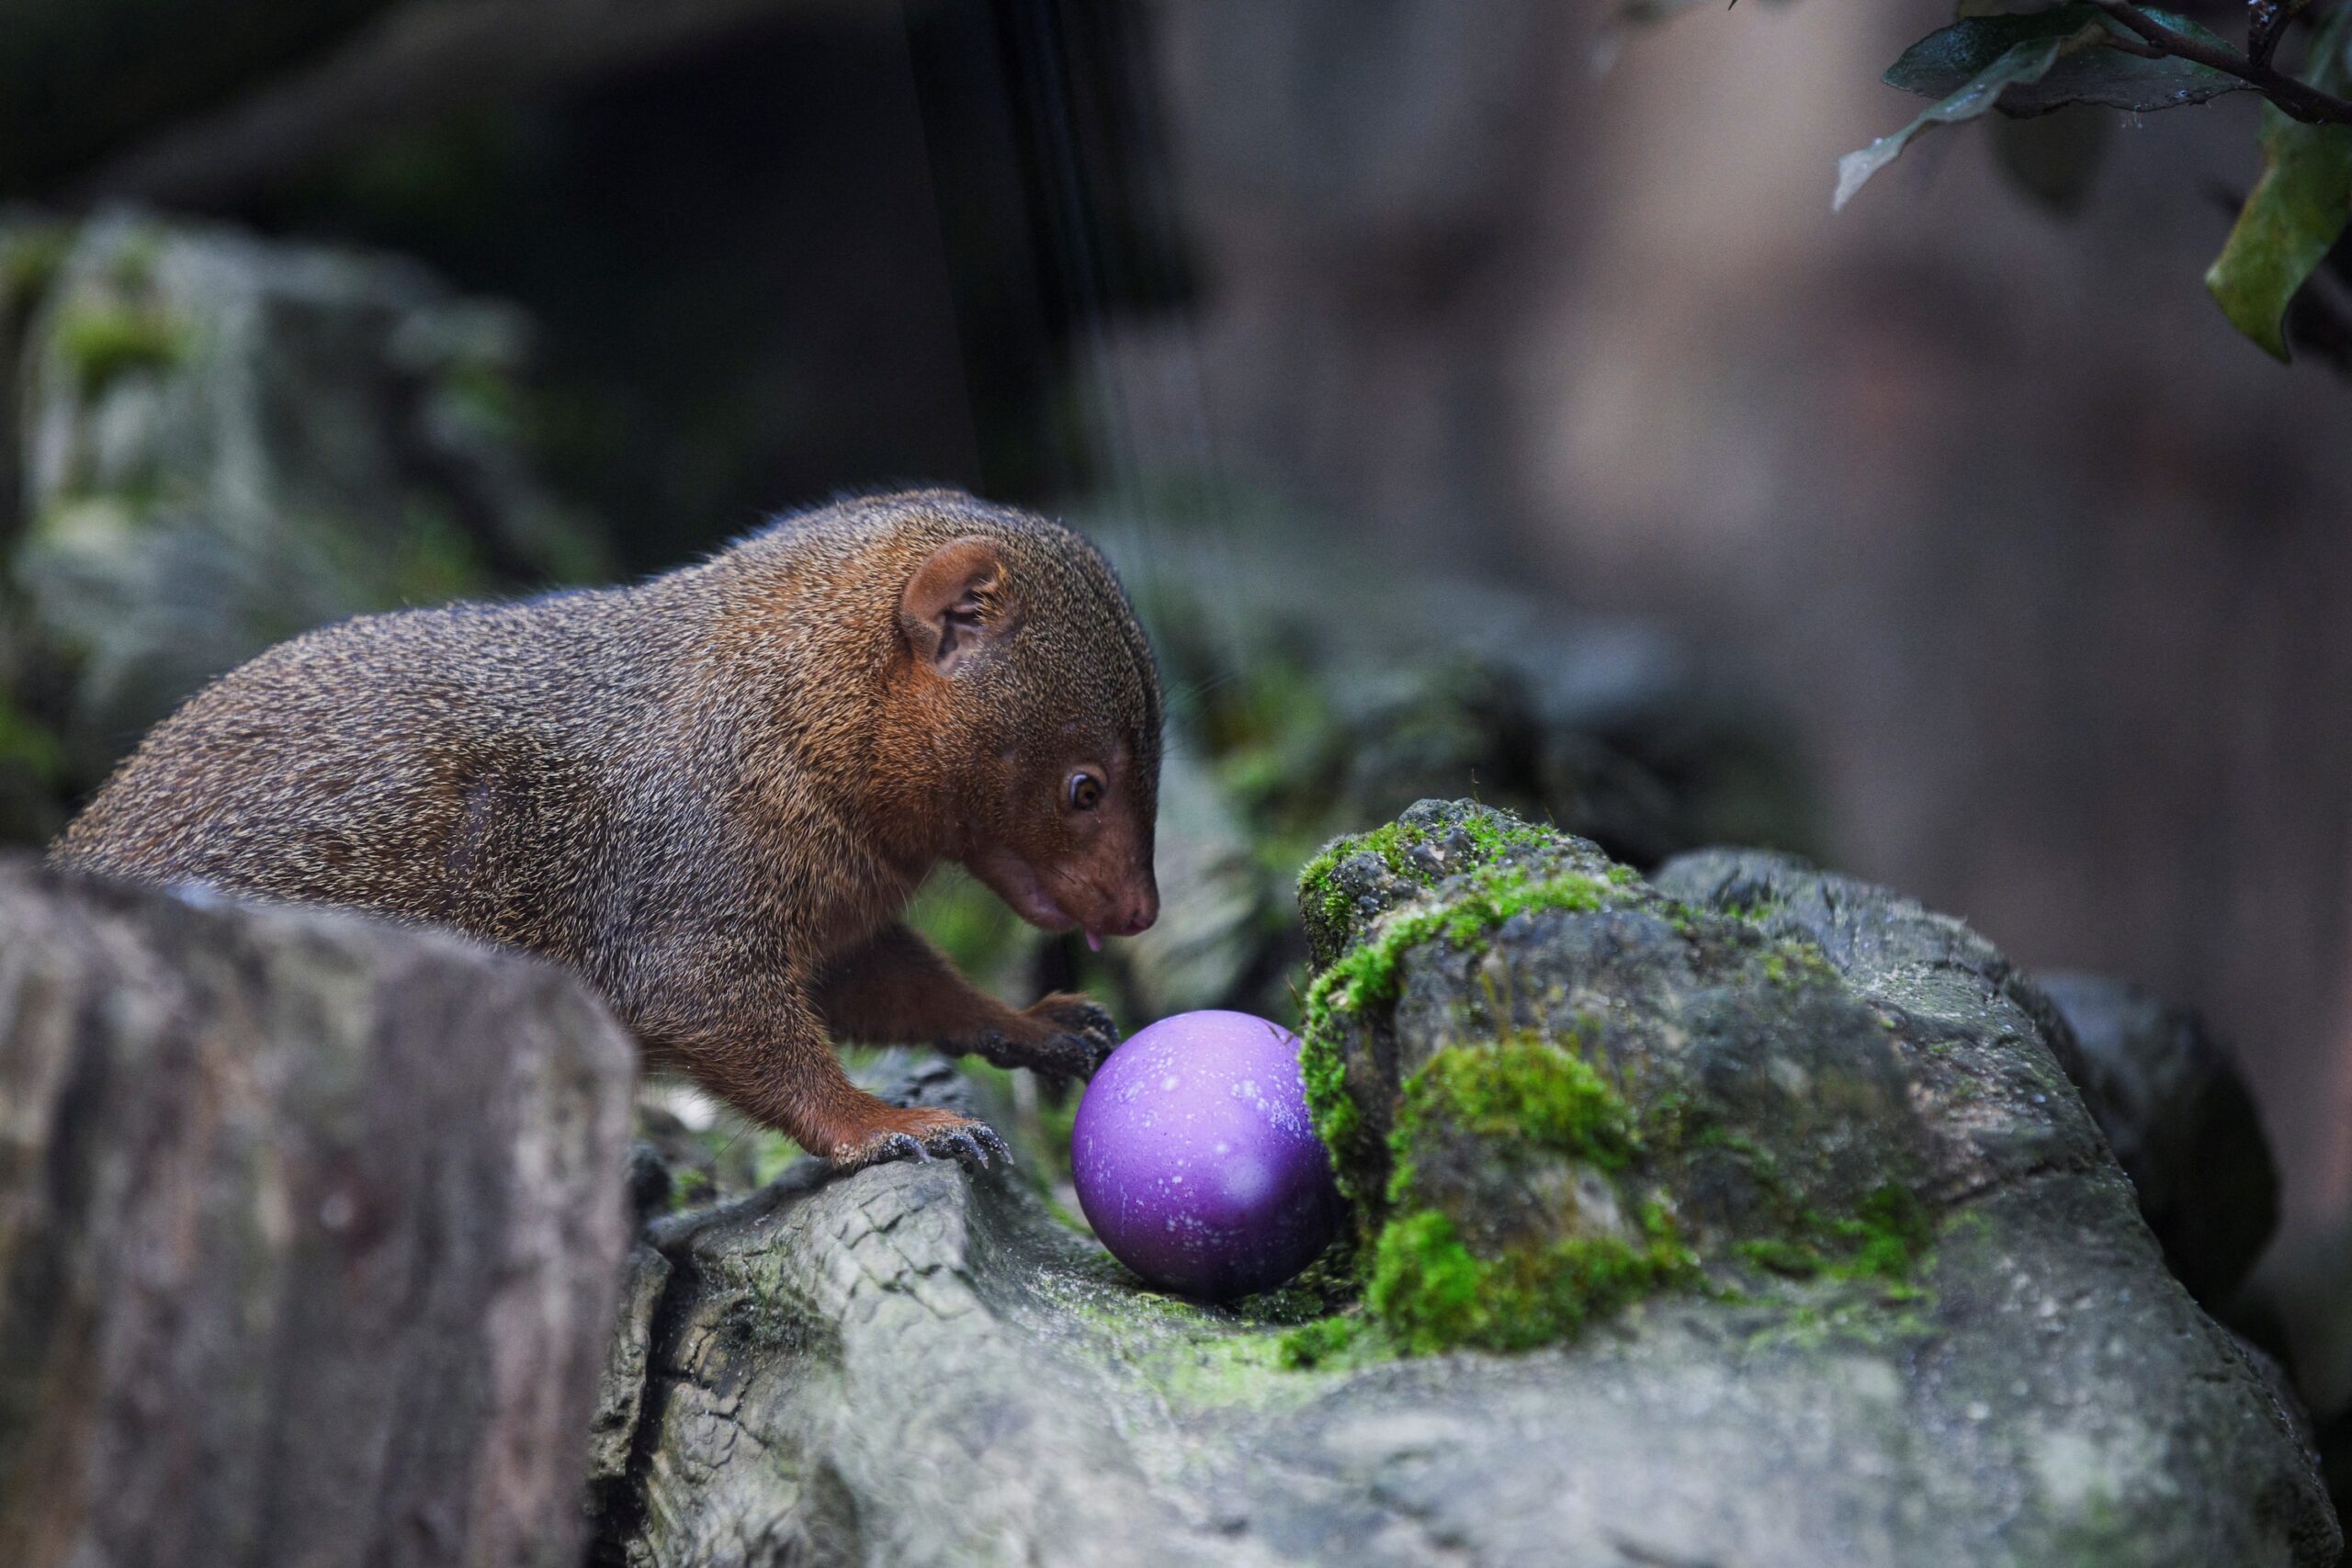 German zoo animals enjoy egg-cellent Easter treats